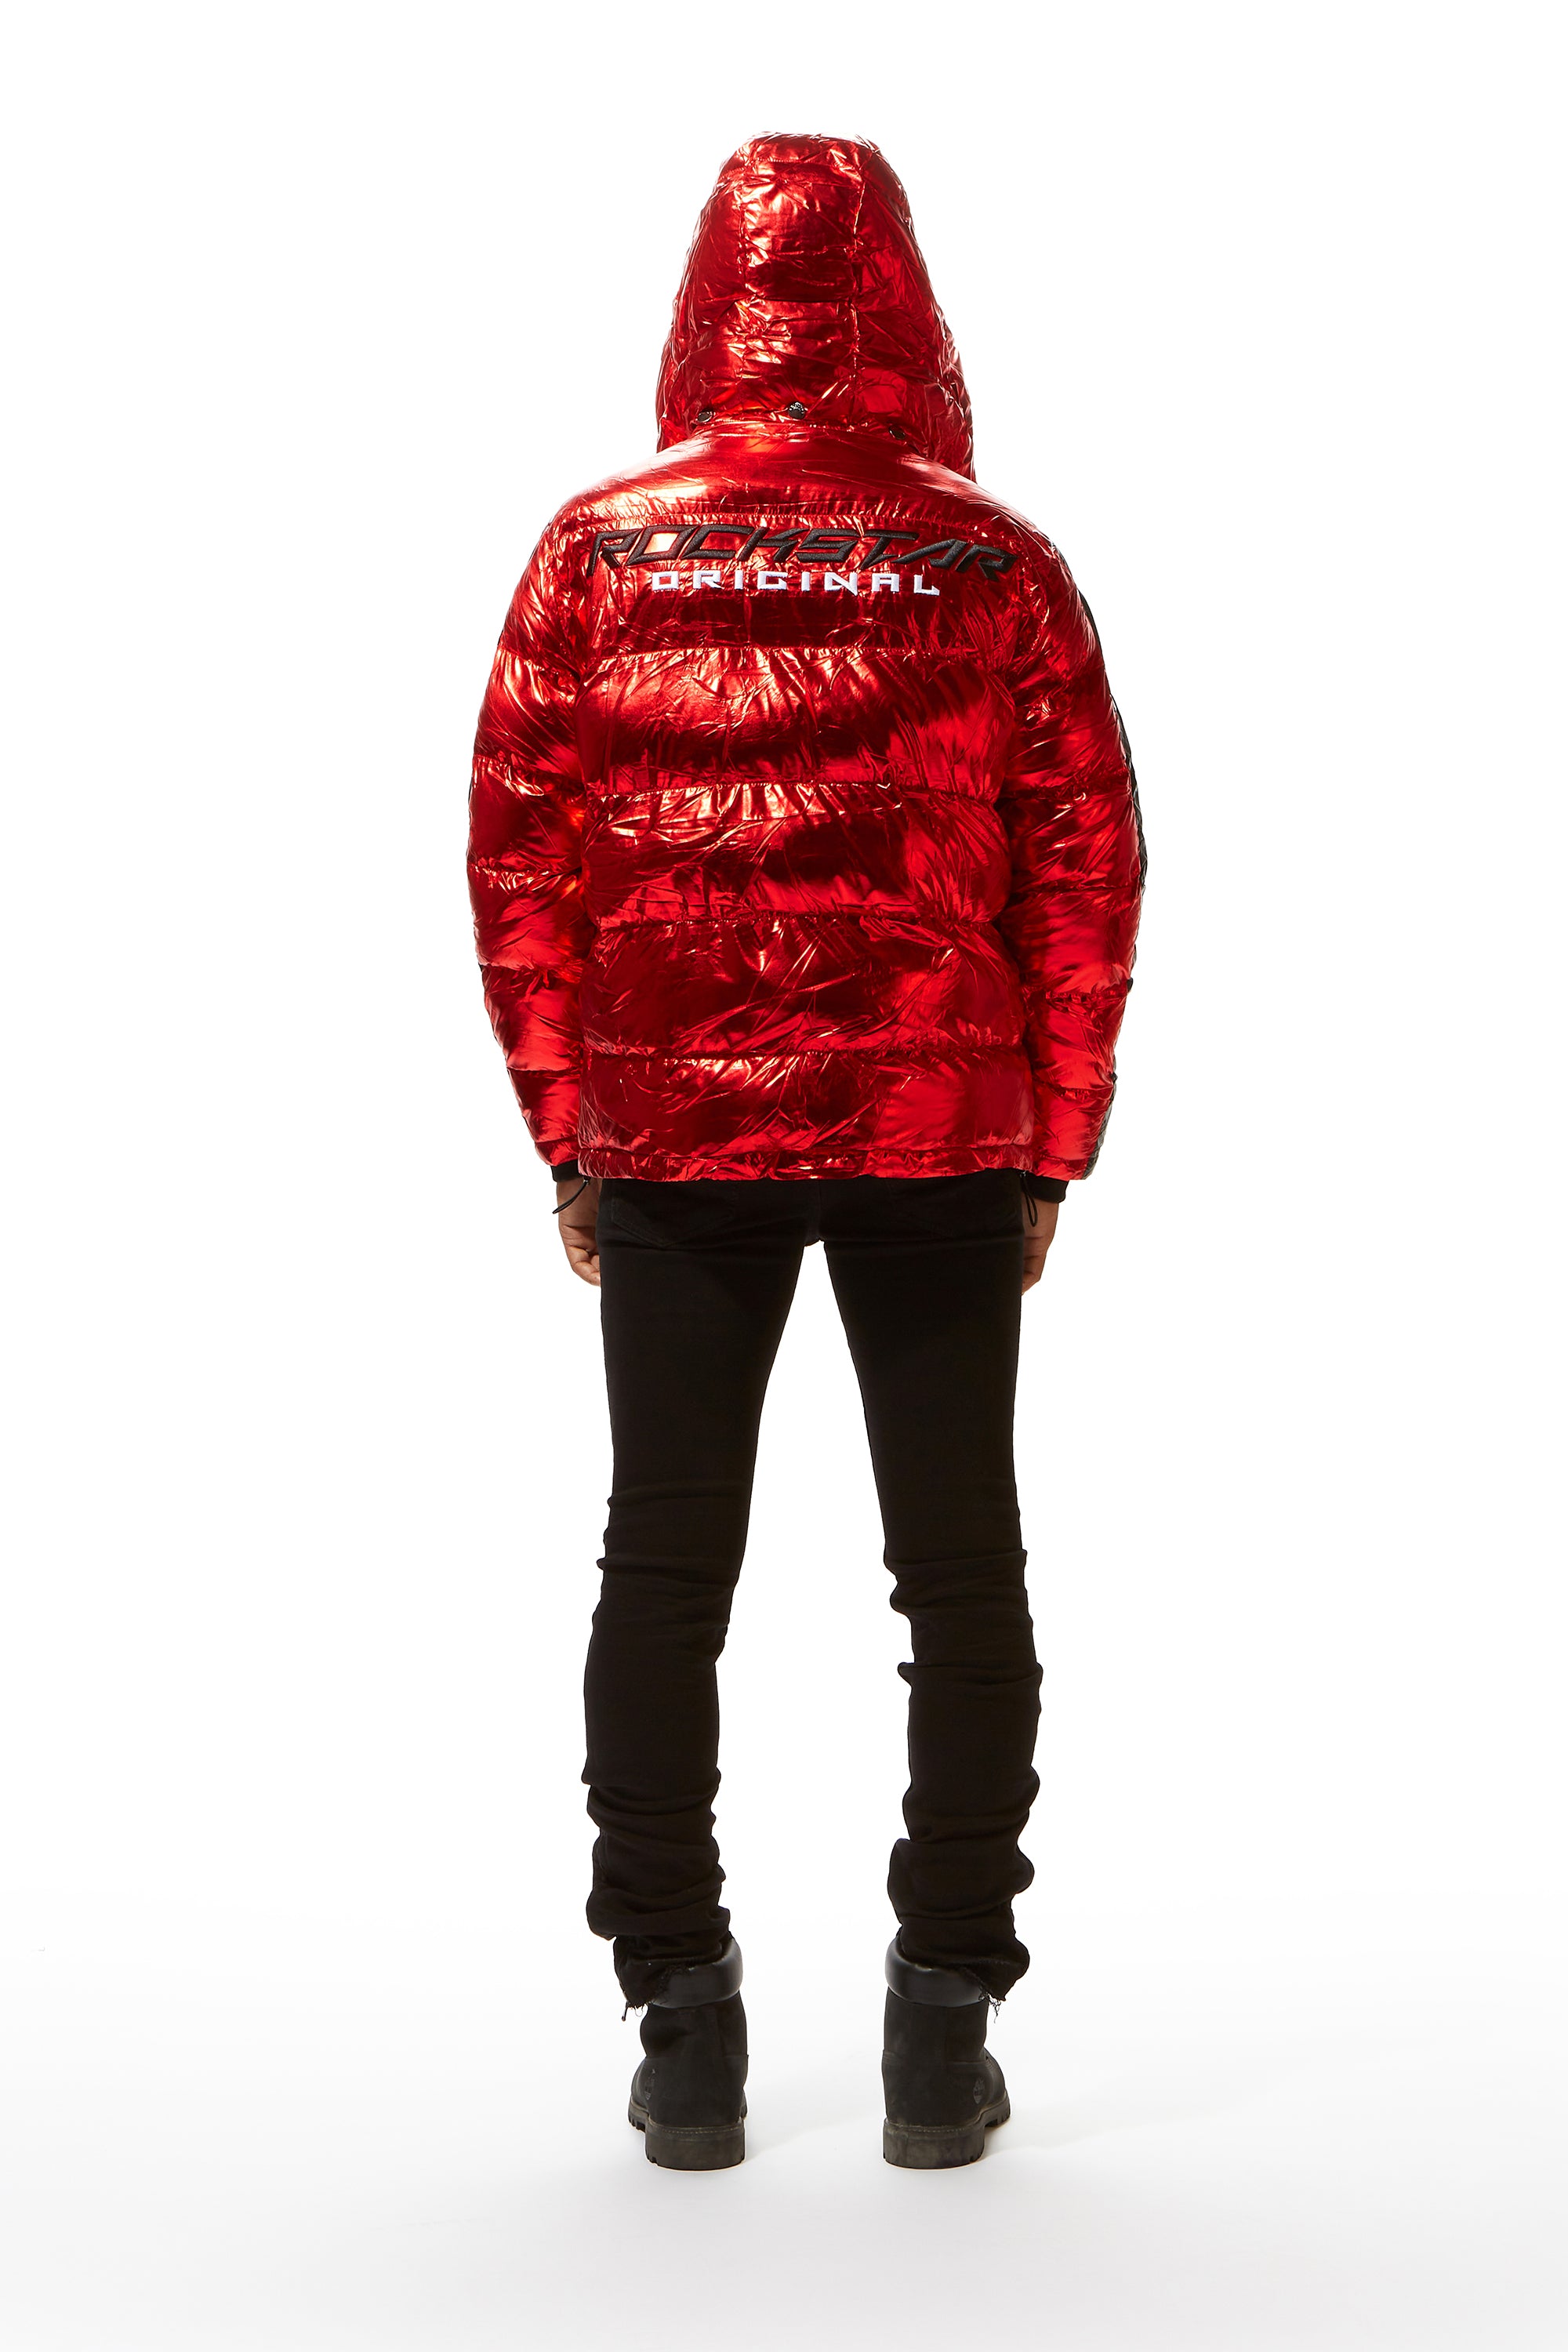 Metallic Red Alasia Puffer Jacket– Rockstar Original